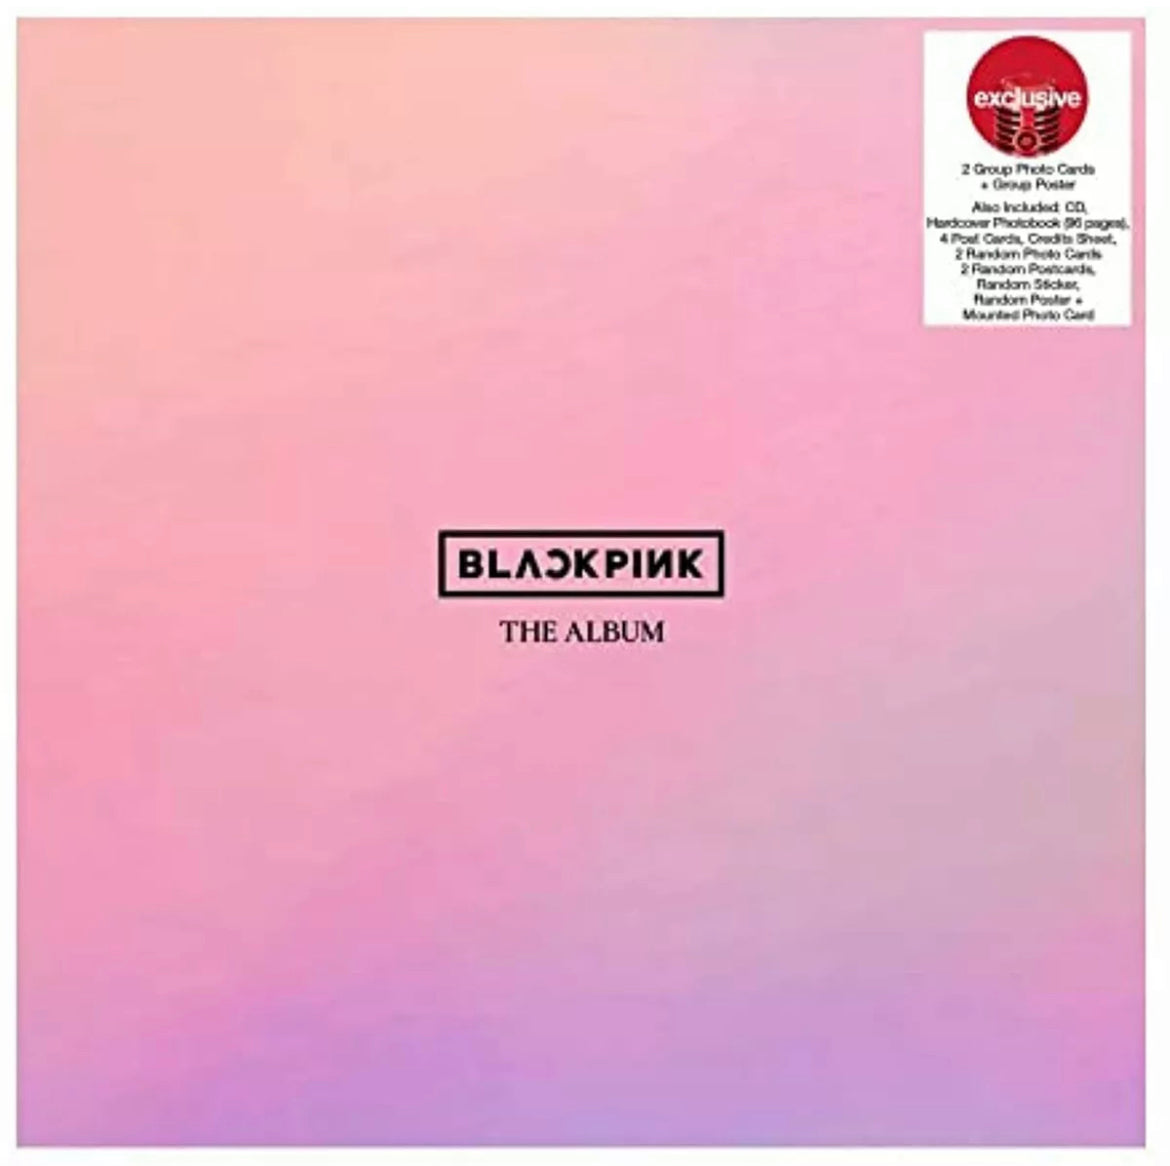 BlackPink - The Album - Exclusive Limited Edition CD Box Set (Version ...